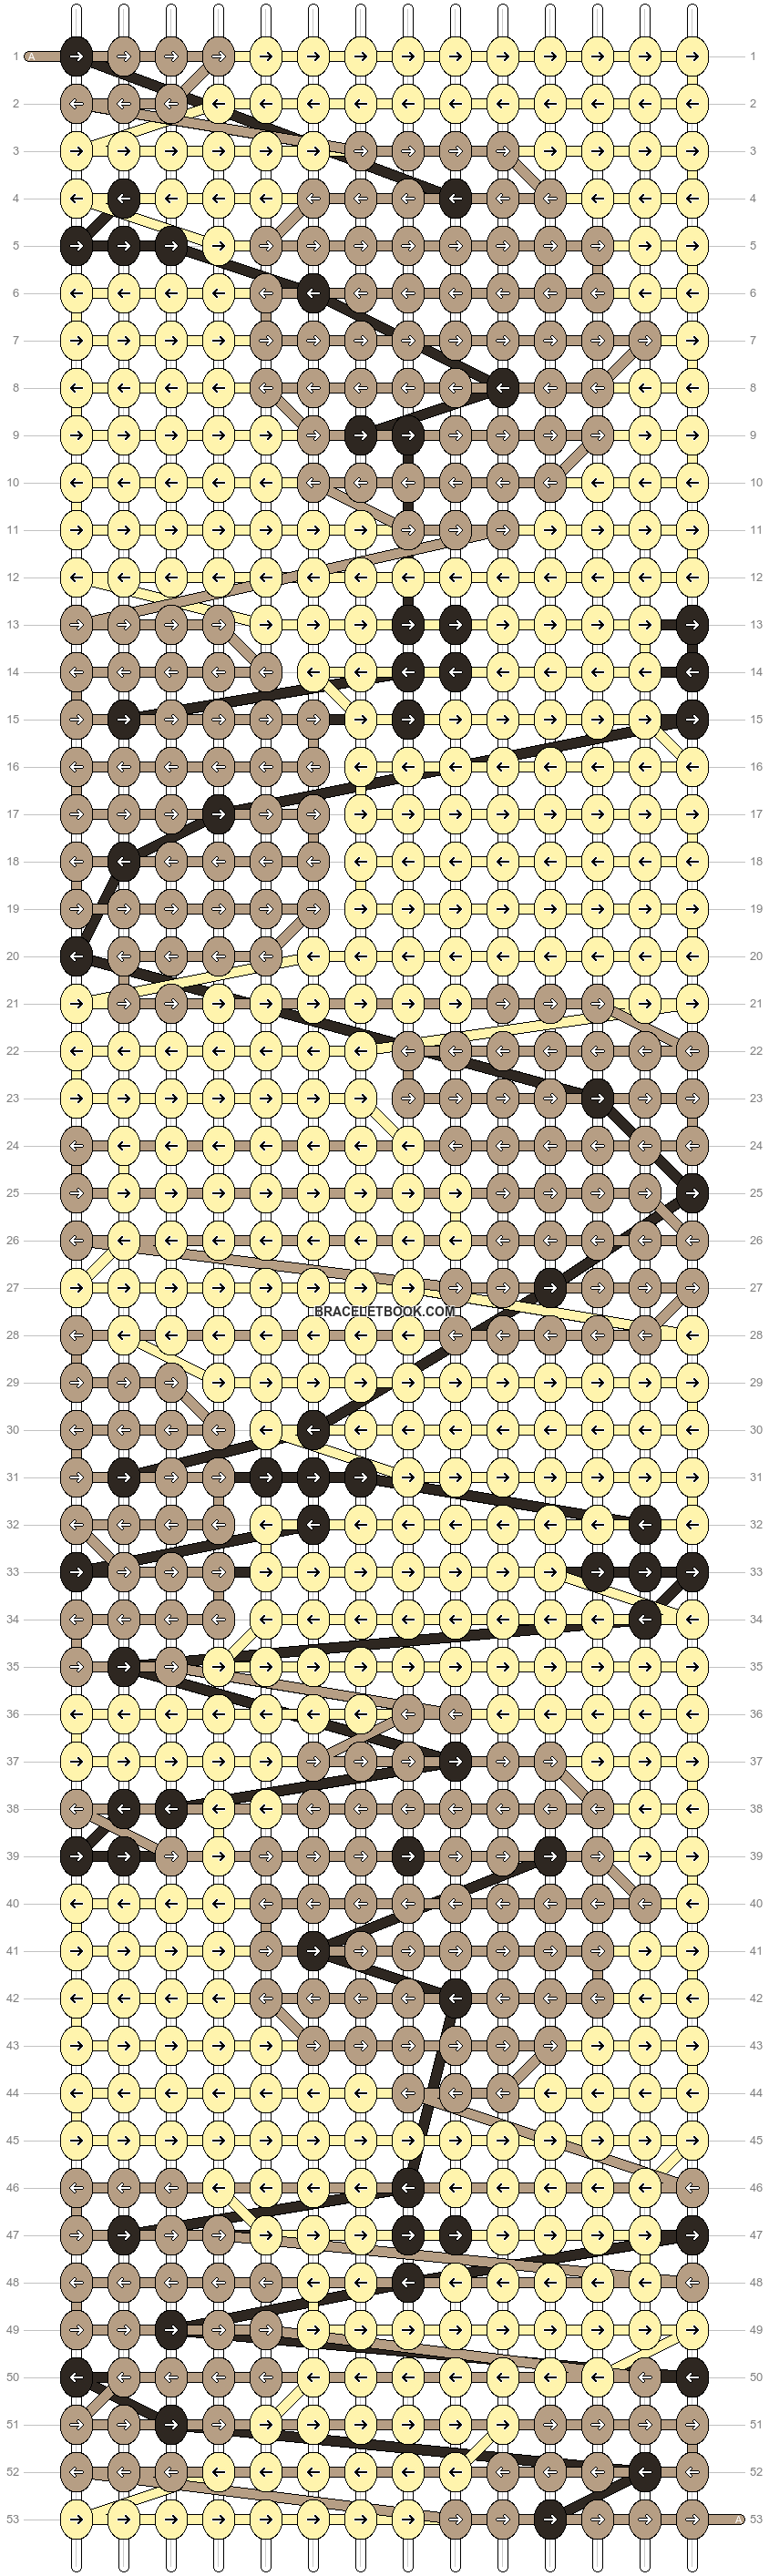 Alpha pattern #84301 variation #178025 pattern